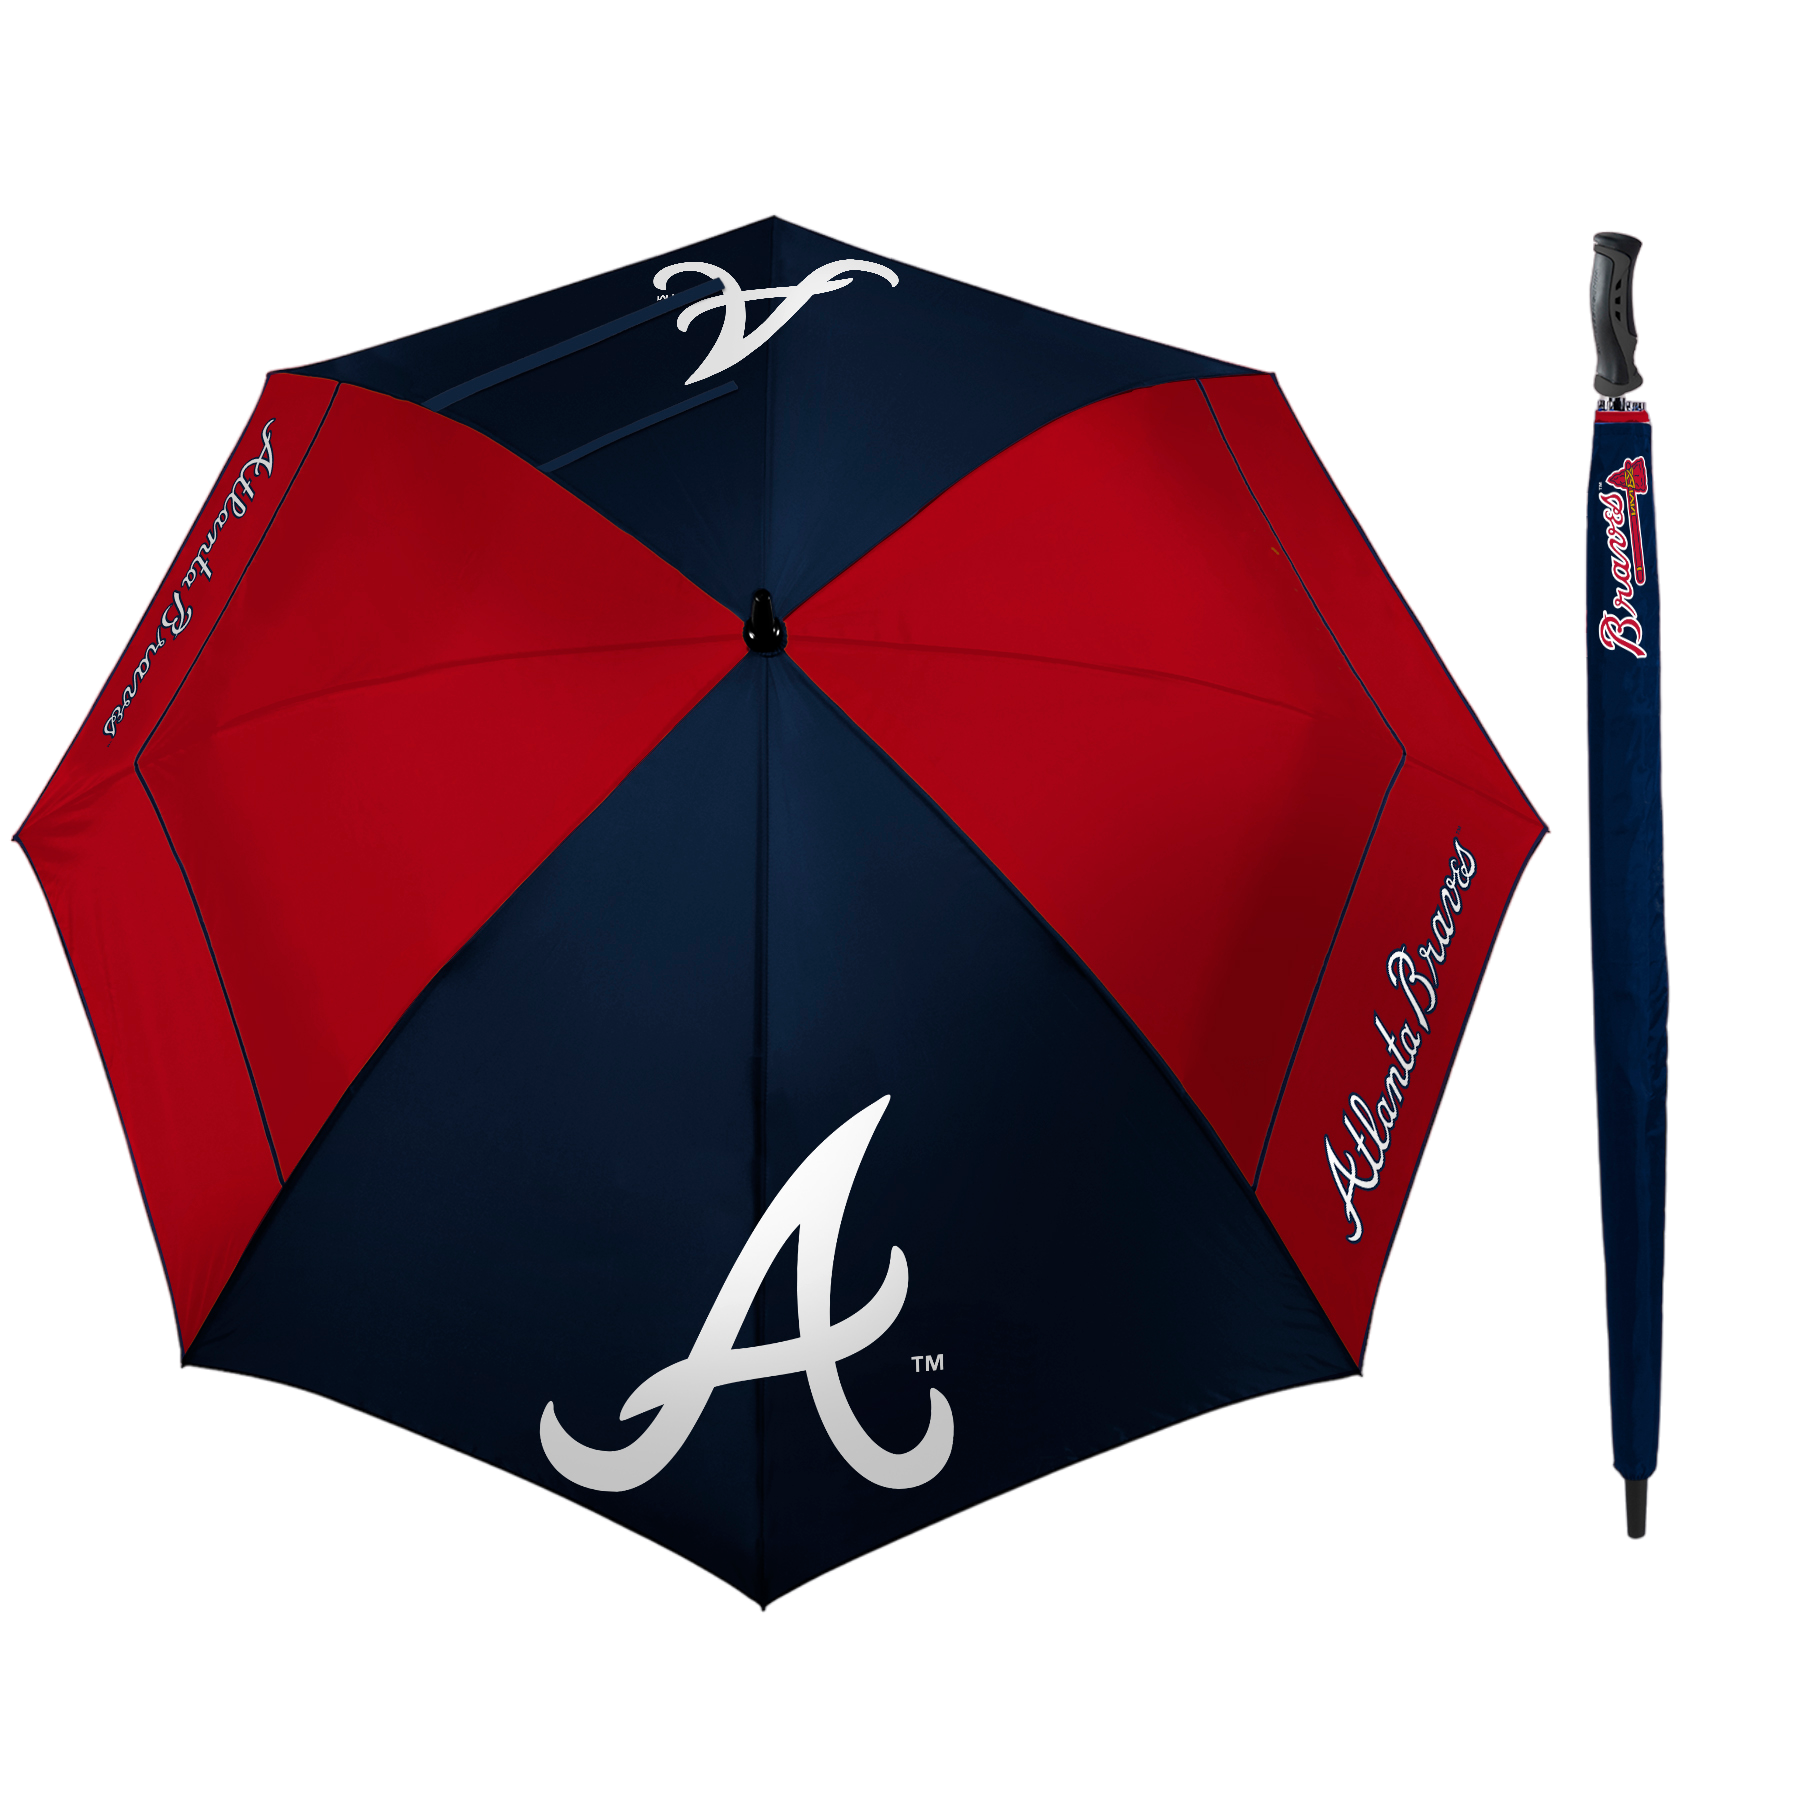 Atlanta Braves 62" WindSheer Lite Umbrella